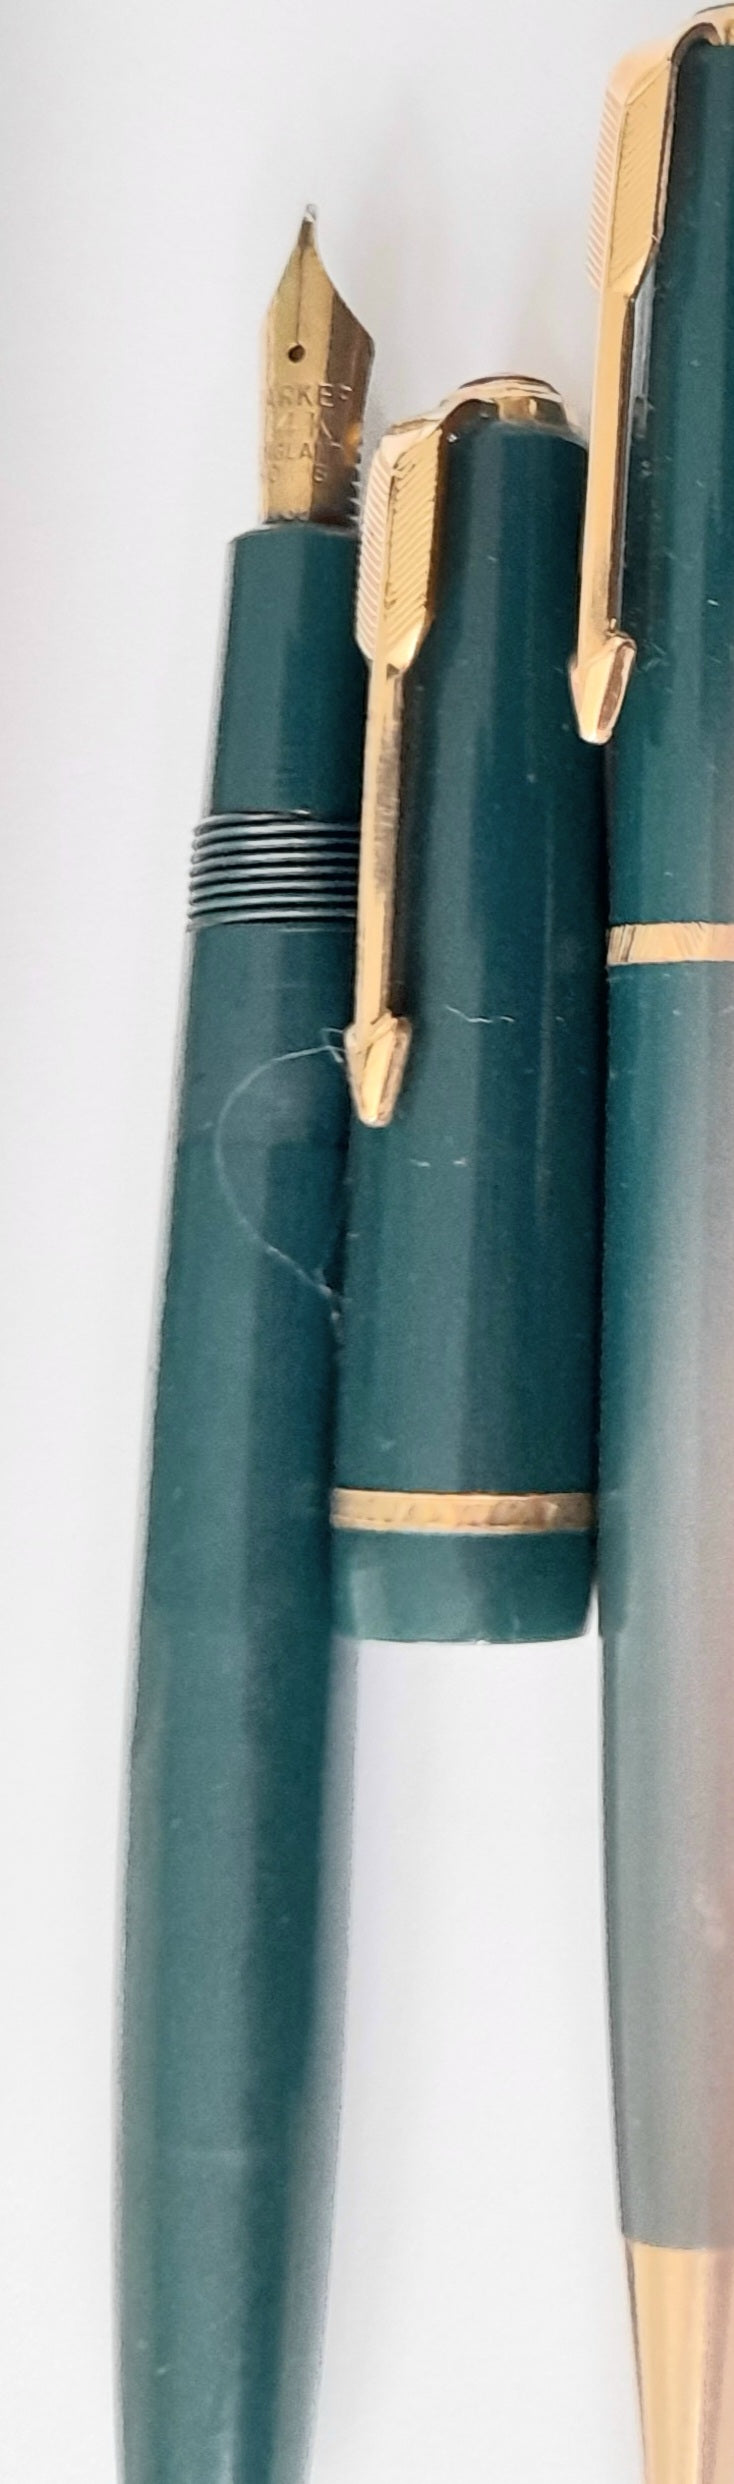 Parker Junior Fountain Pen  and Pencil Green body